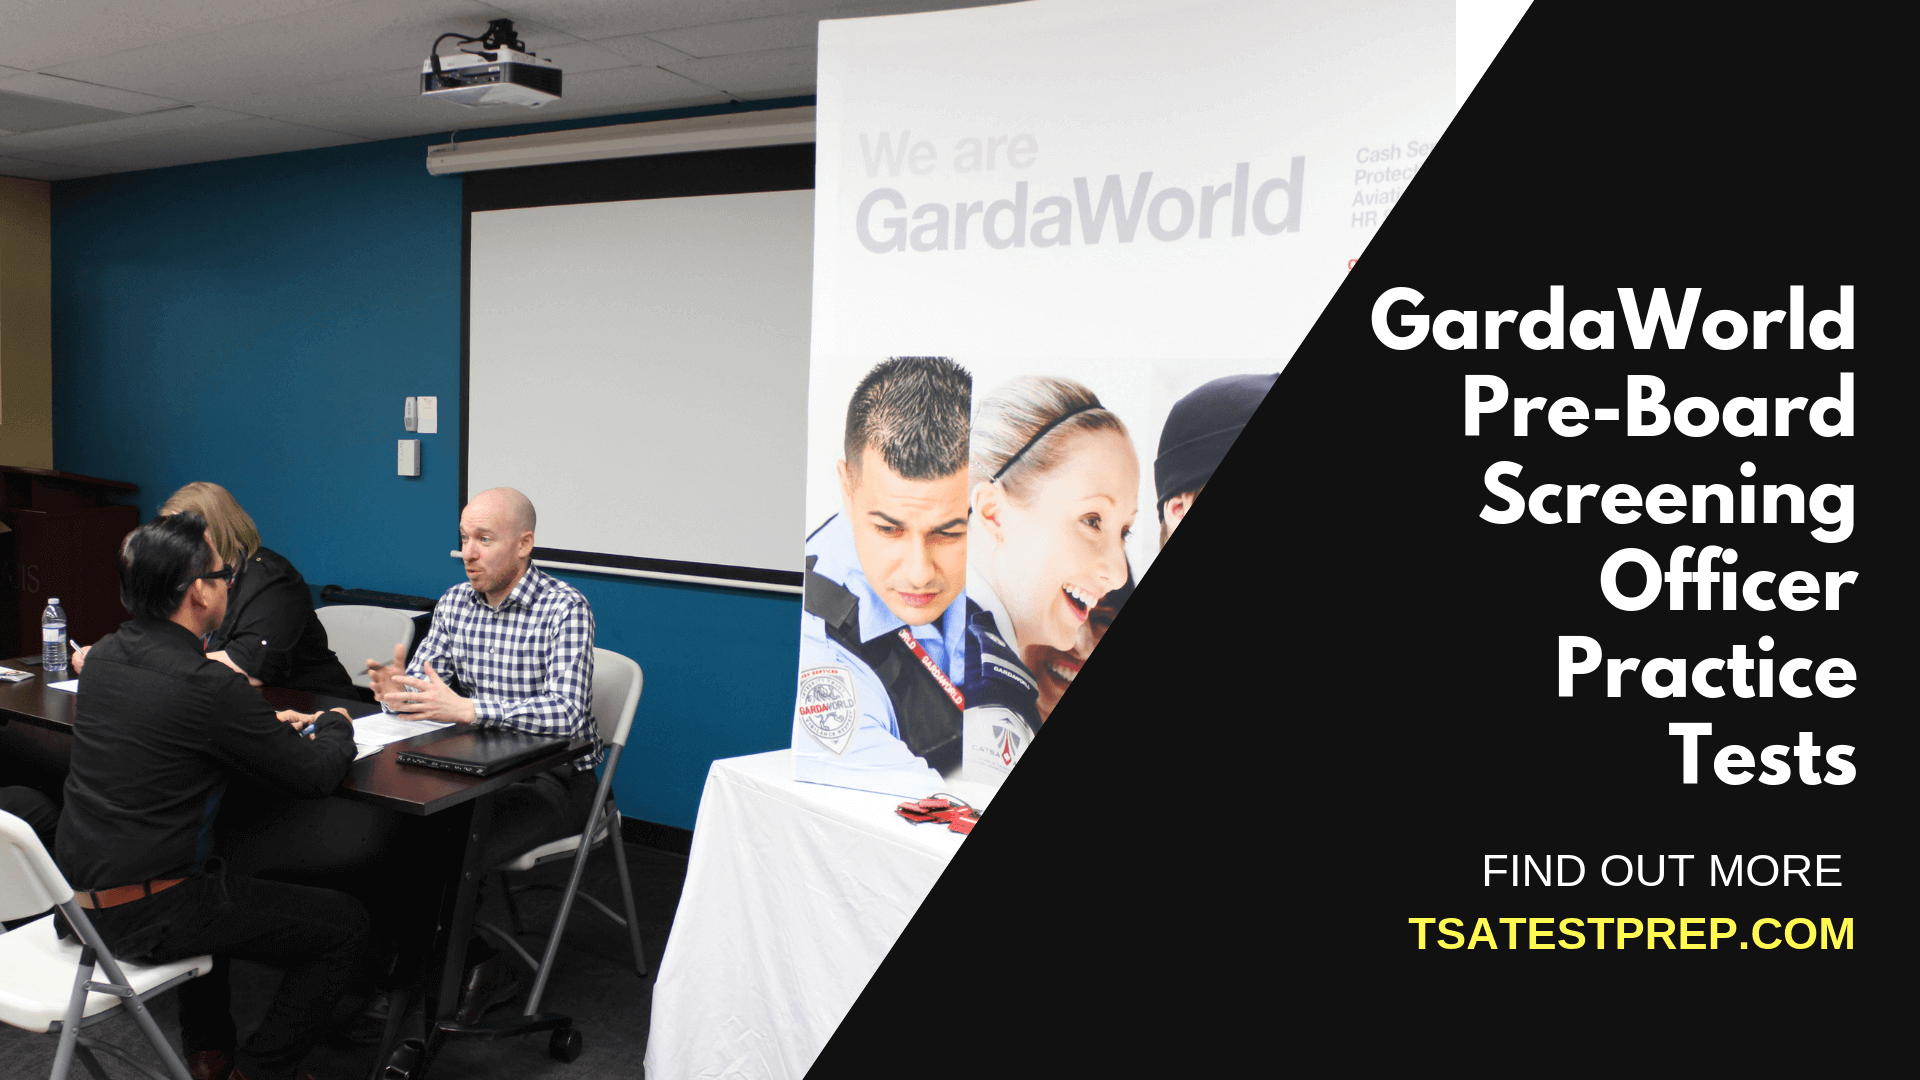 GardaWorld Pre-Board Screening Officer Practice Tests